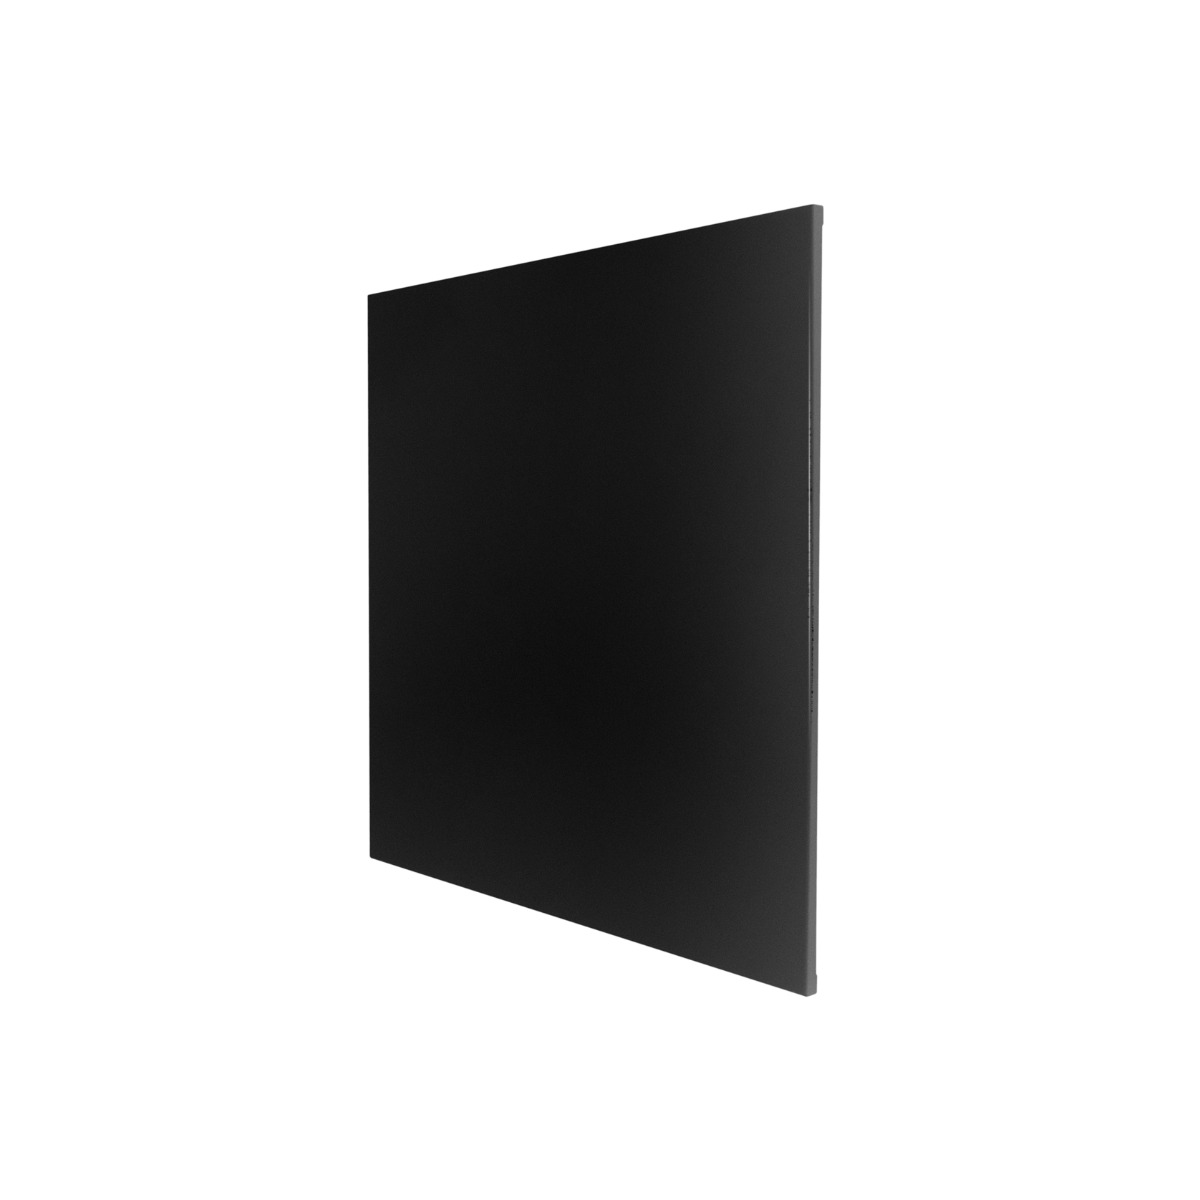 Technotherm ISP Frameless Infrared Heating Panel - Black 350w (600 x 600mm)